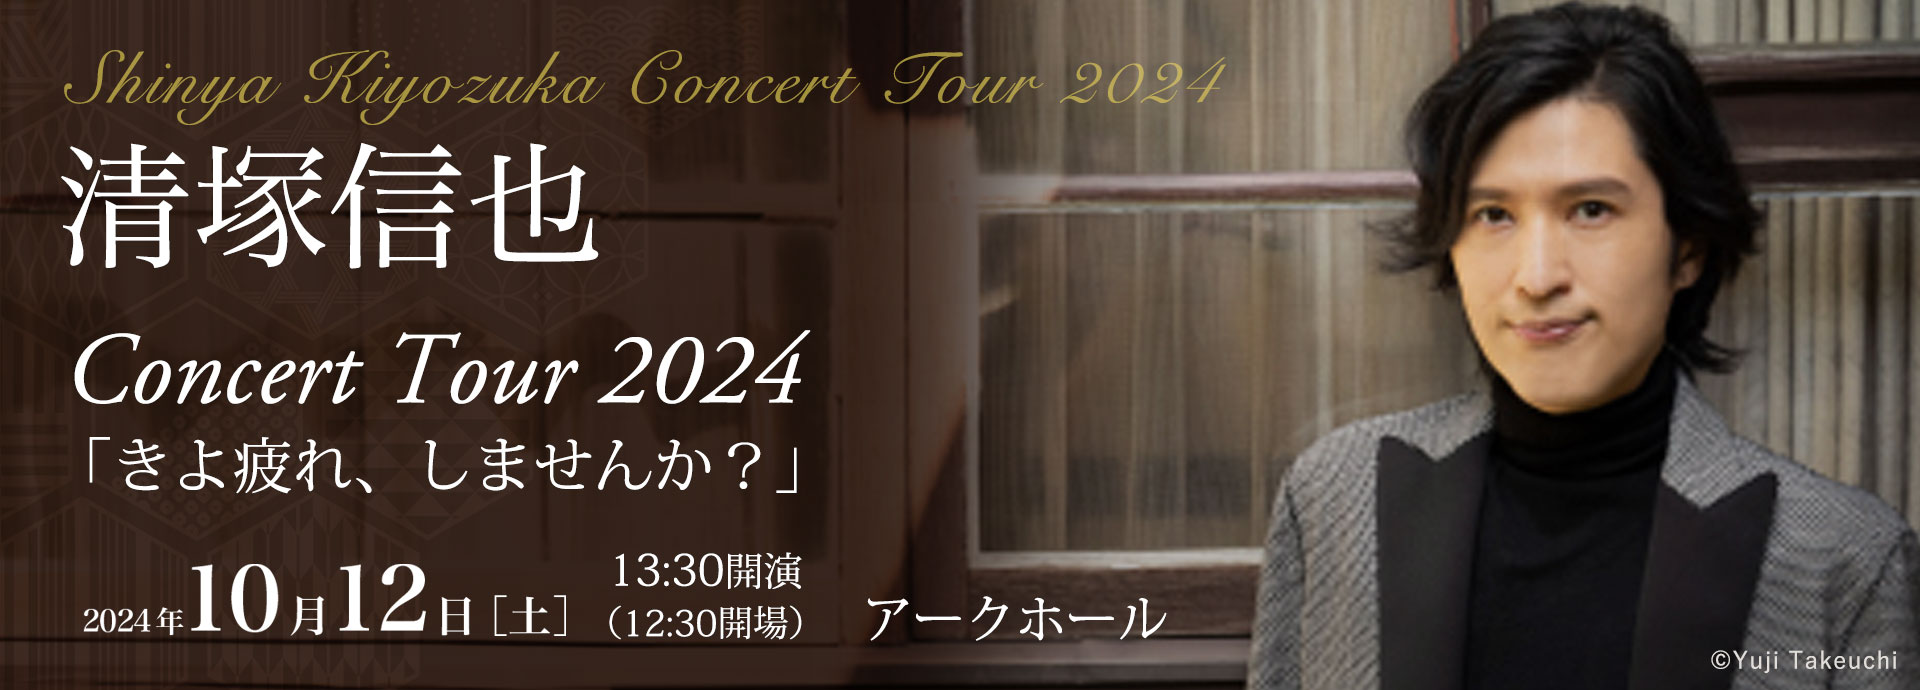 清塚信也 concert tour 2024